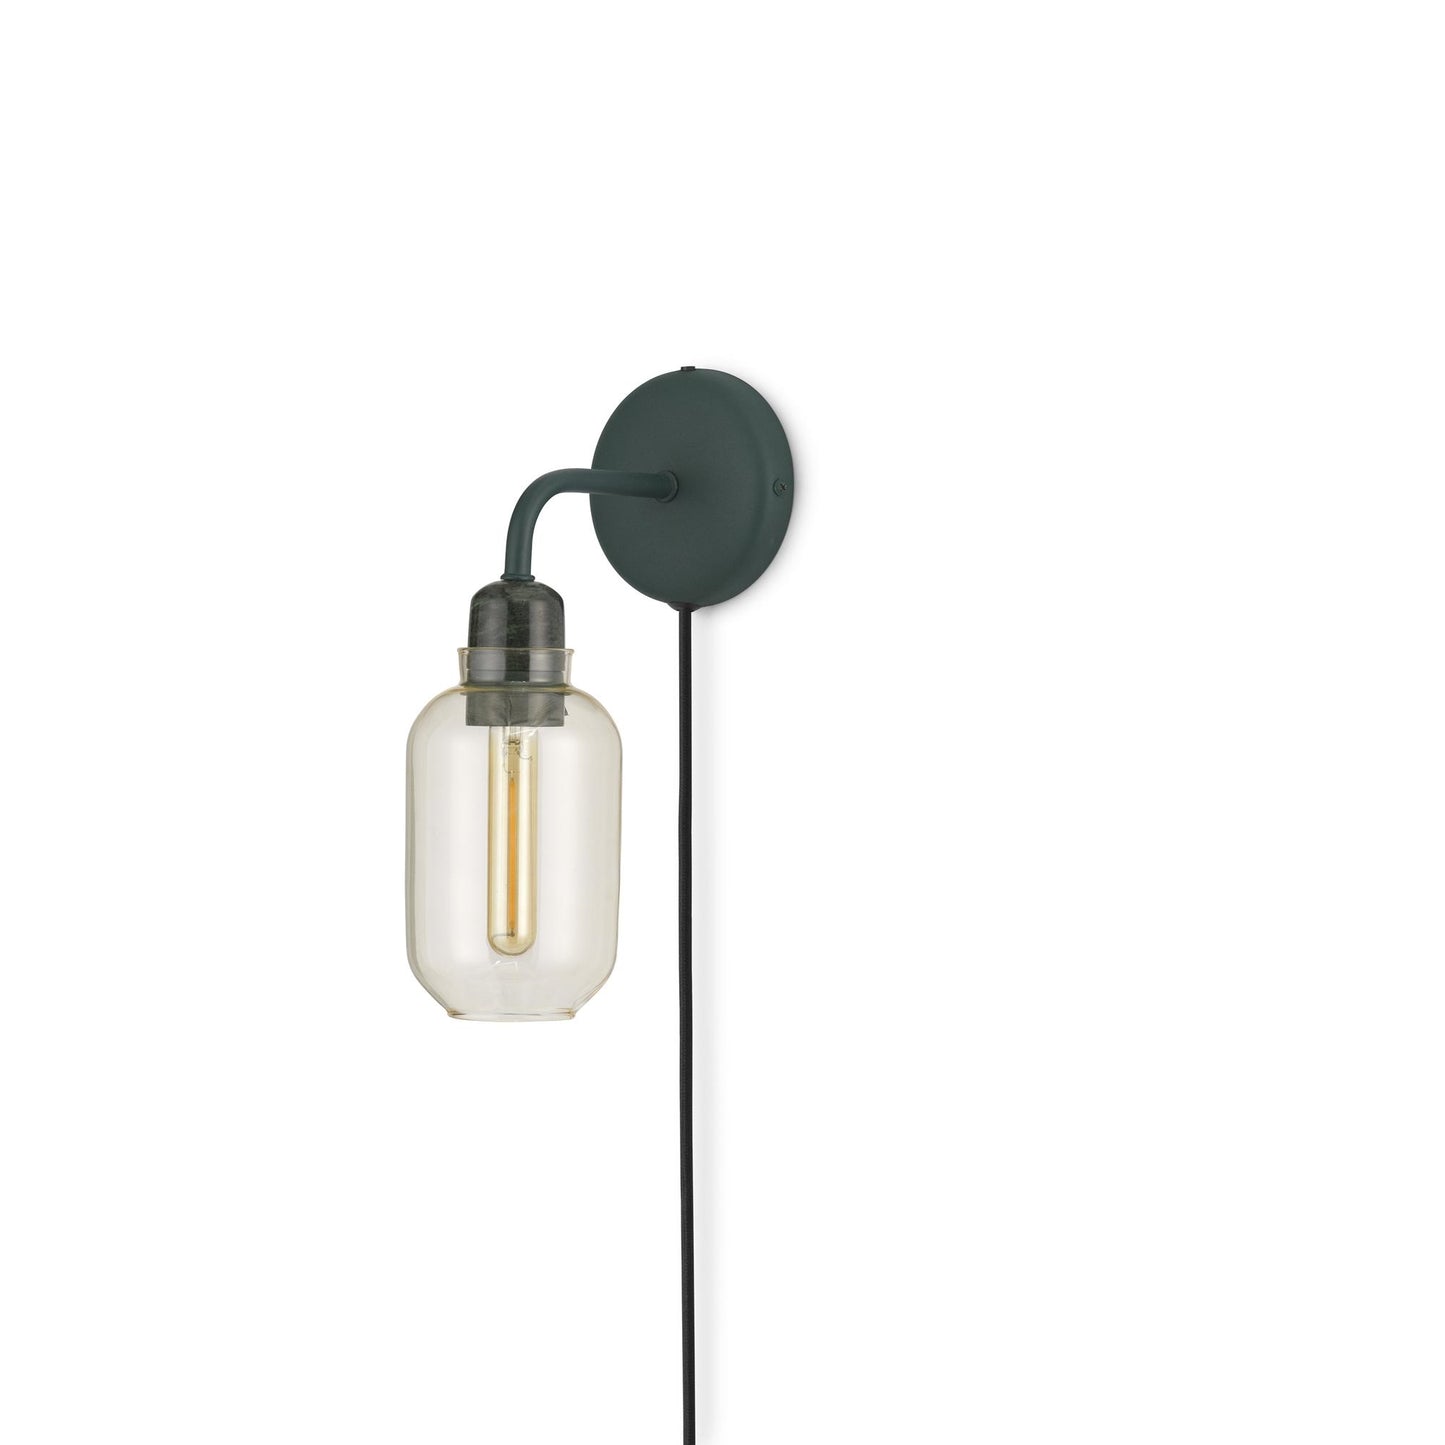 Amp Wall Lamp by Normann Copenhagen #Gold / Green marble